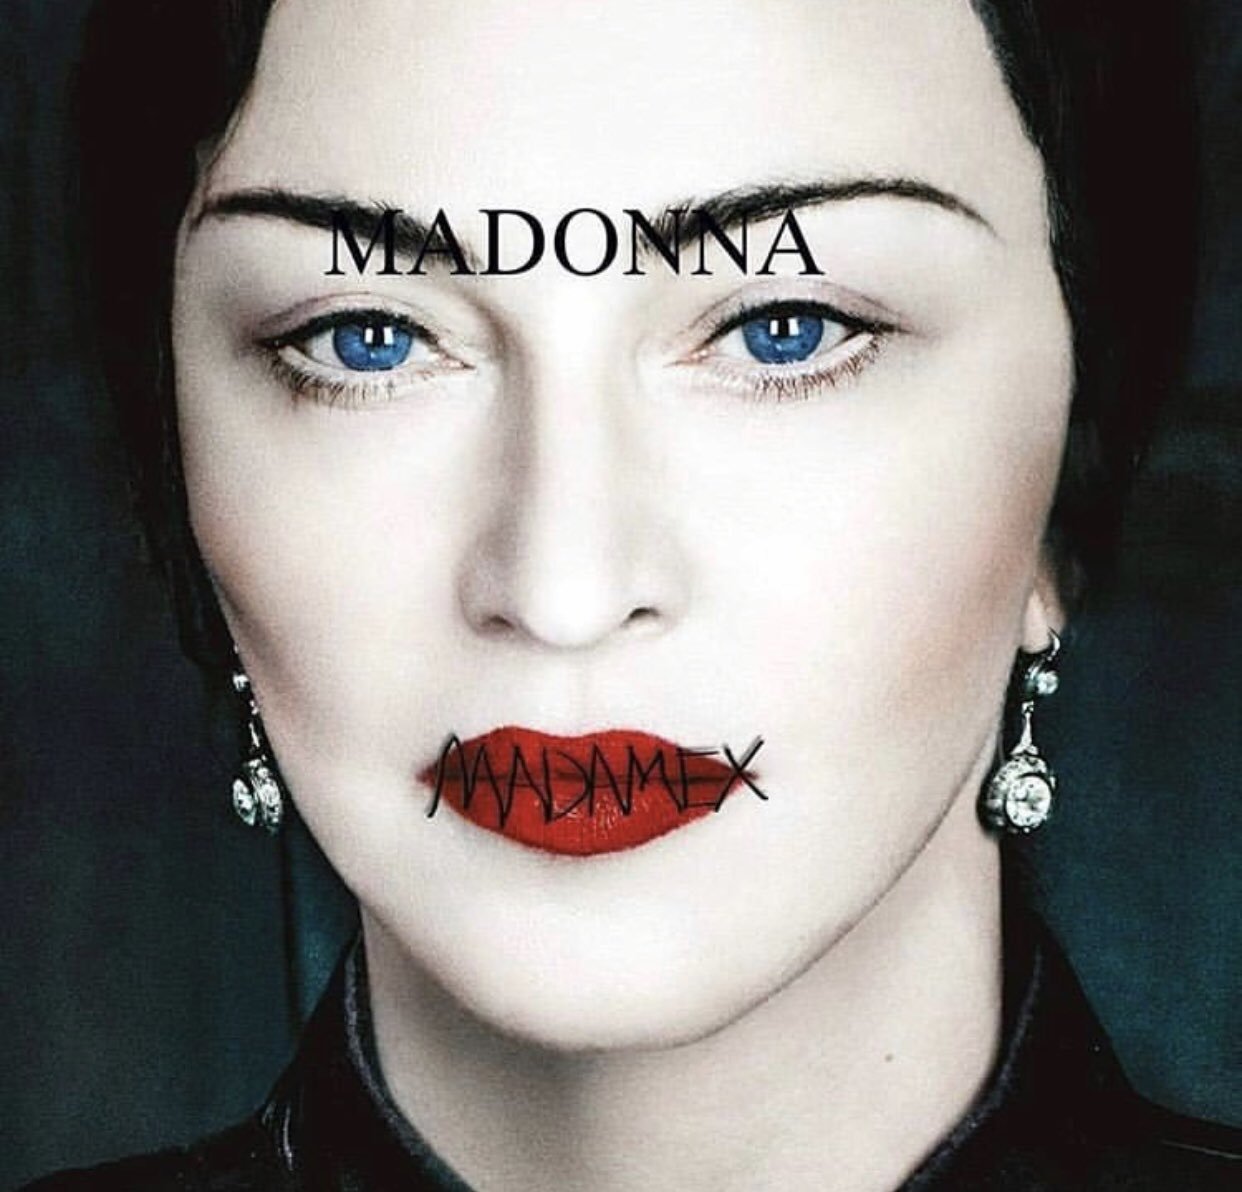 Madonna >> álbum "Madame X" - Página 10 D4TpC-7W0AA4Hvk.jpg.c1bc9dff7e10d18139e8c622a8e0e61e